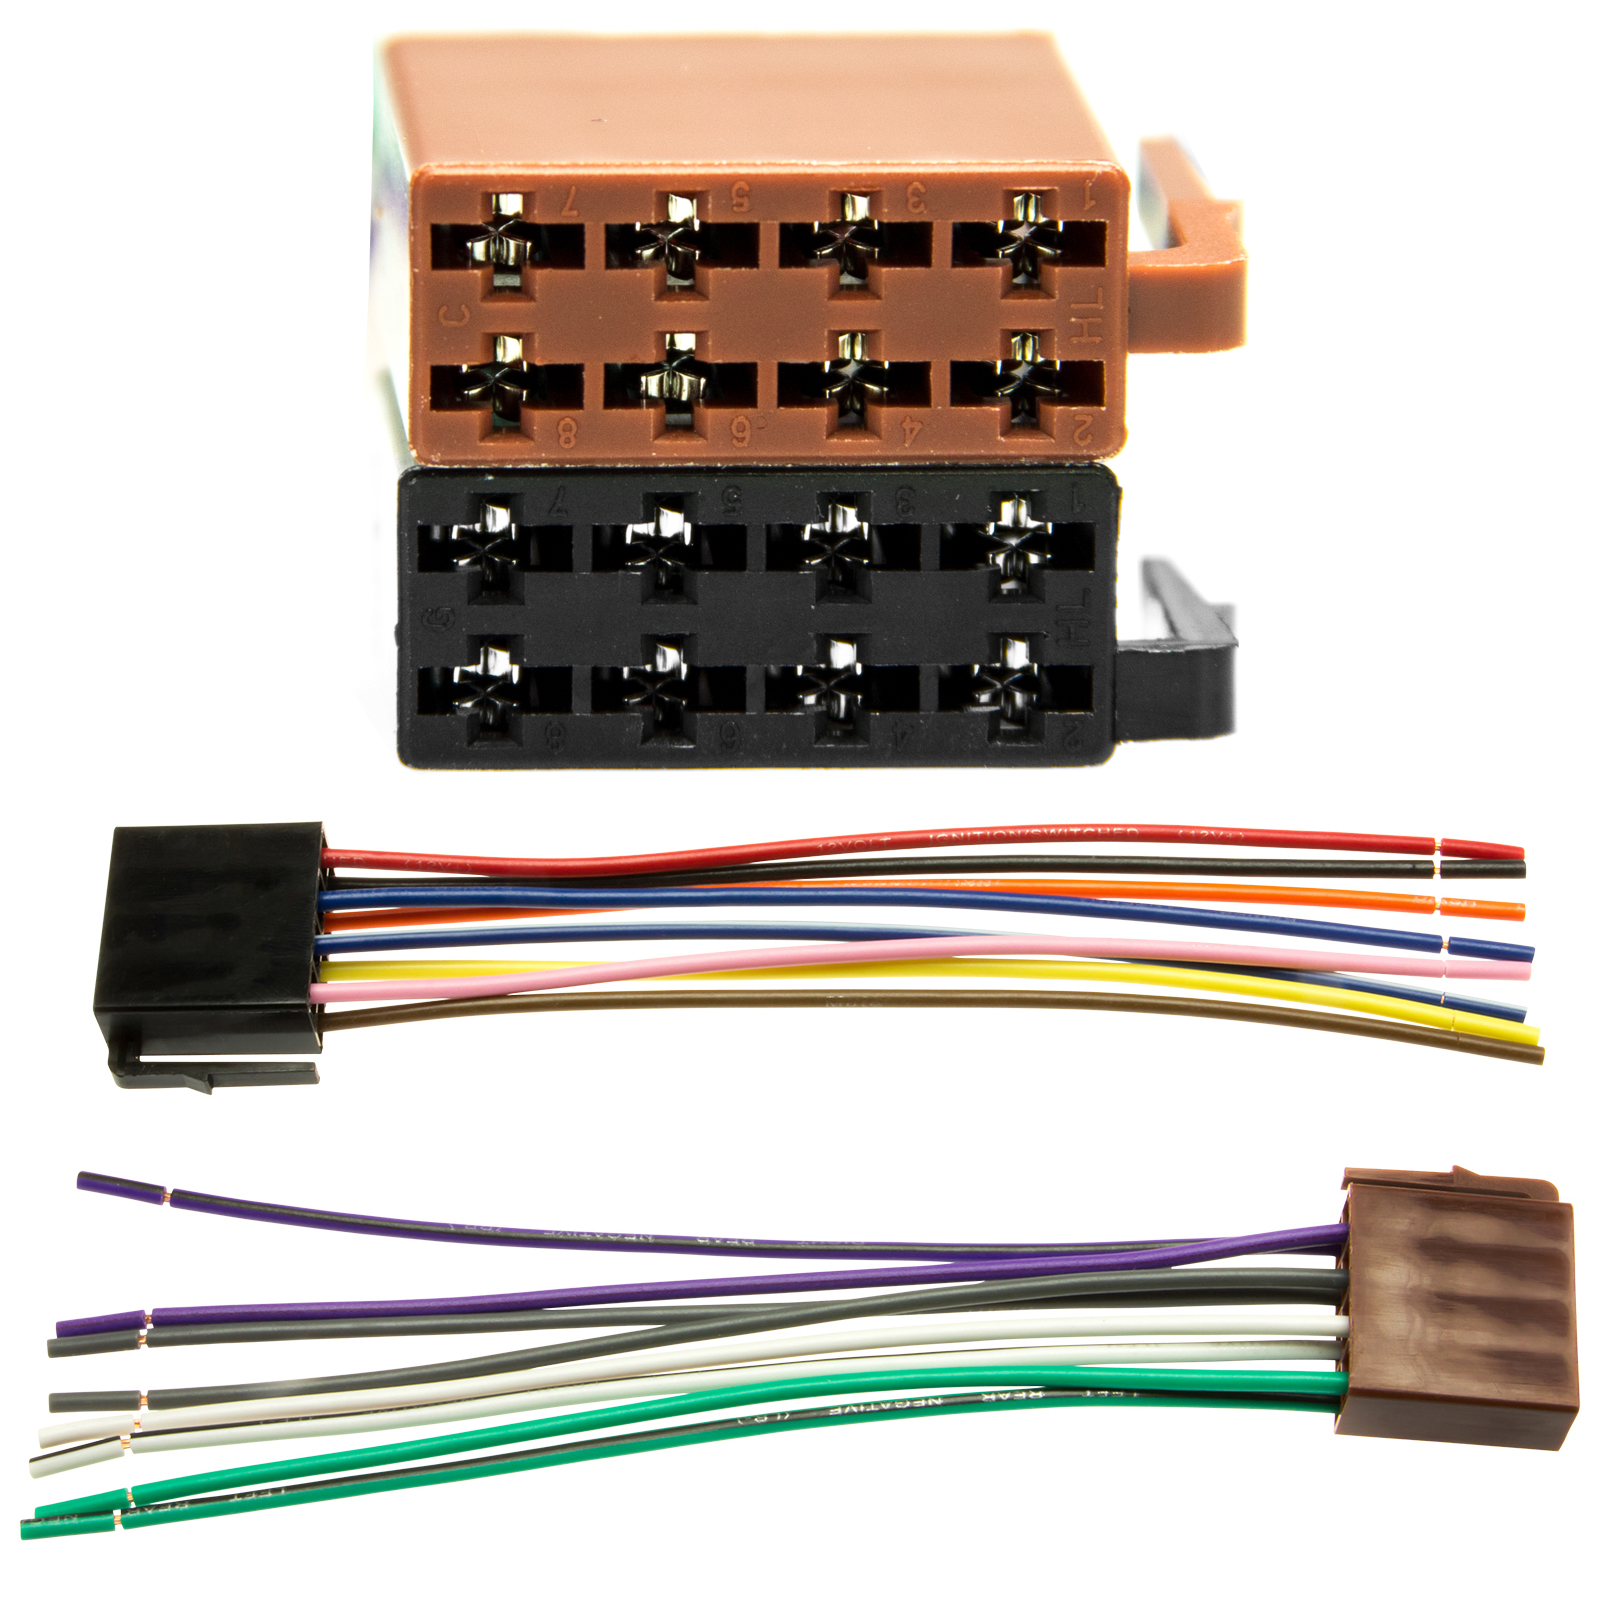 https://www.eu-bay.de/media/image/d9/28/7d/adapter-universe-auto-radio-adapter-kabel-stecker-plug-play-din-225774PN7lkqLaWTgZj.jpg